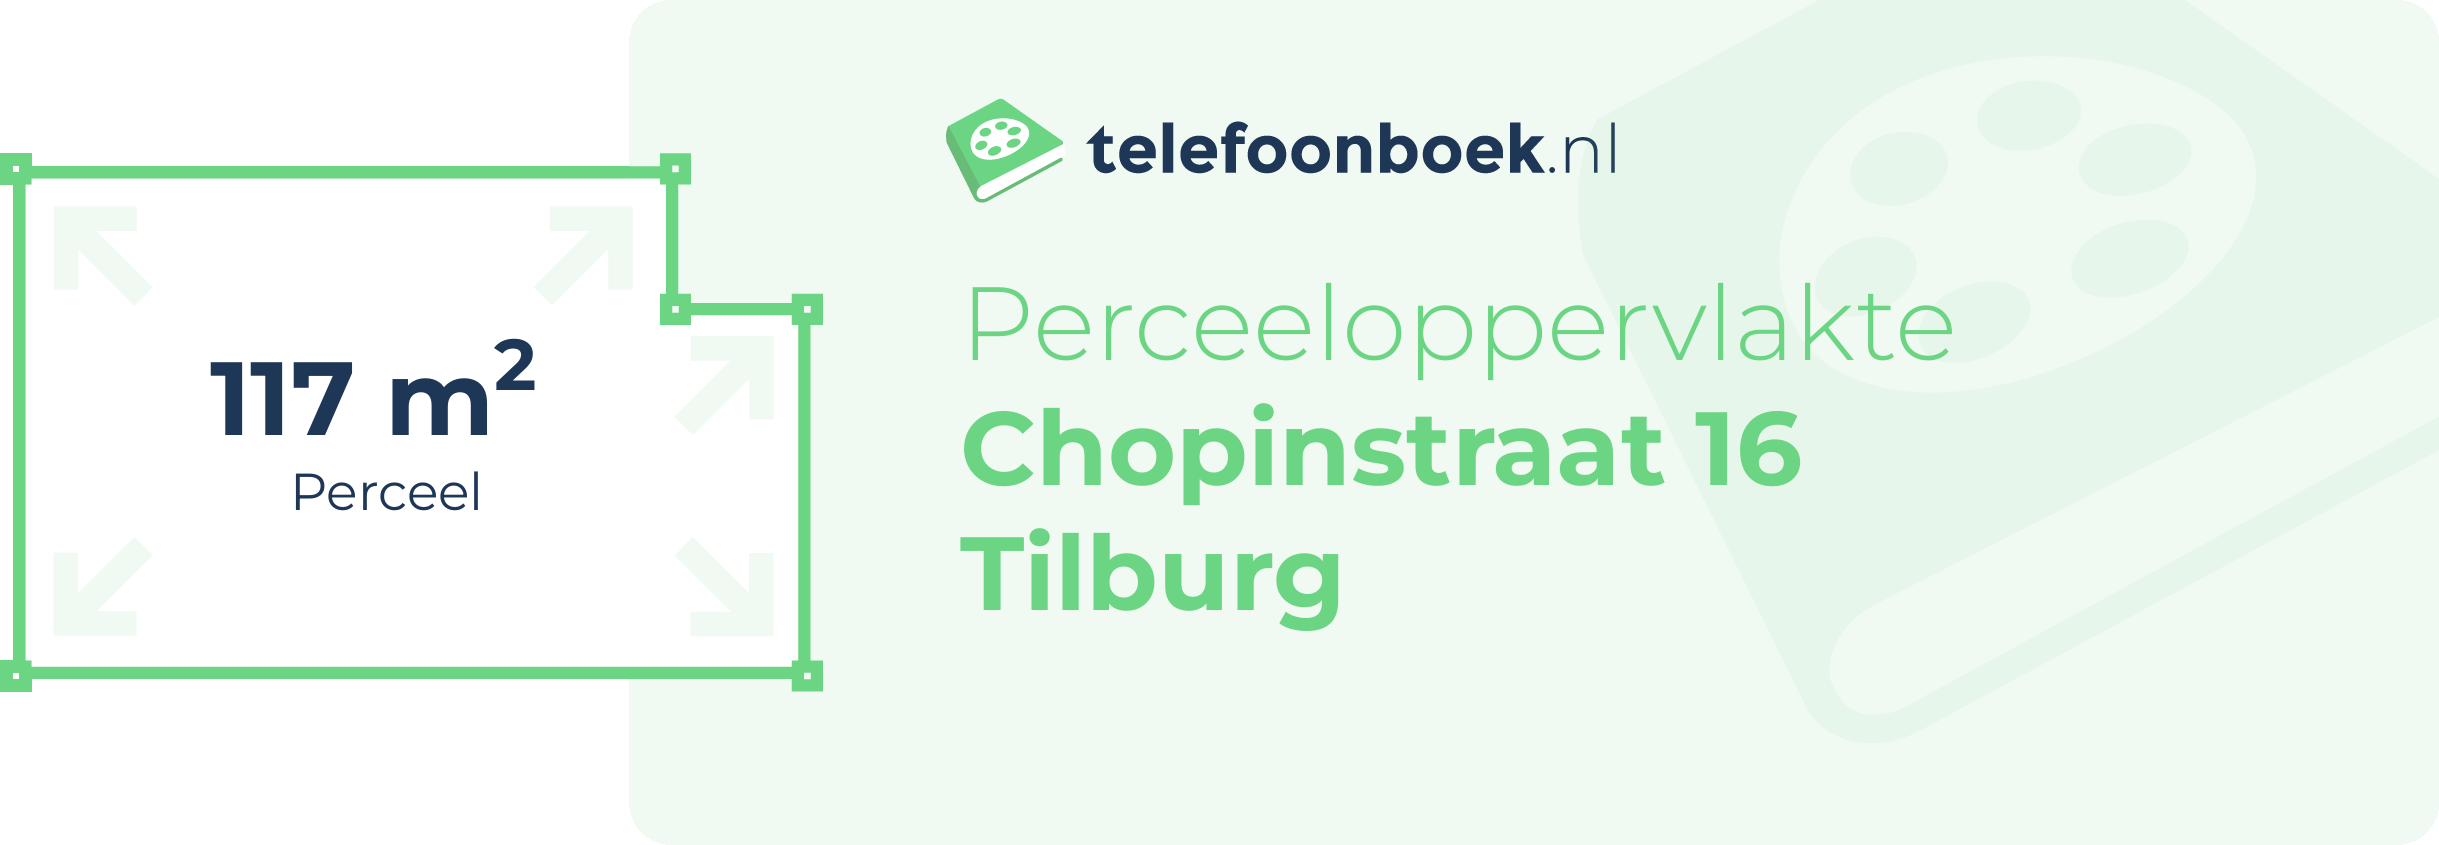 Perceeloppervlakte Chopinstraat 16 Tilburg